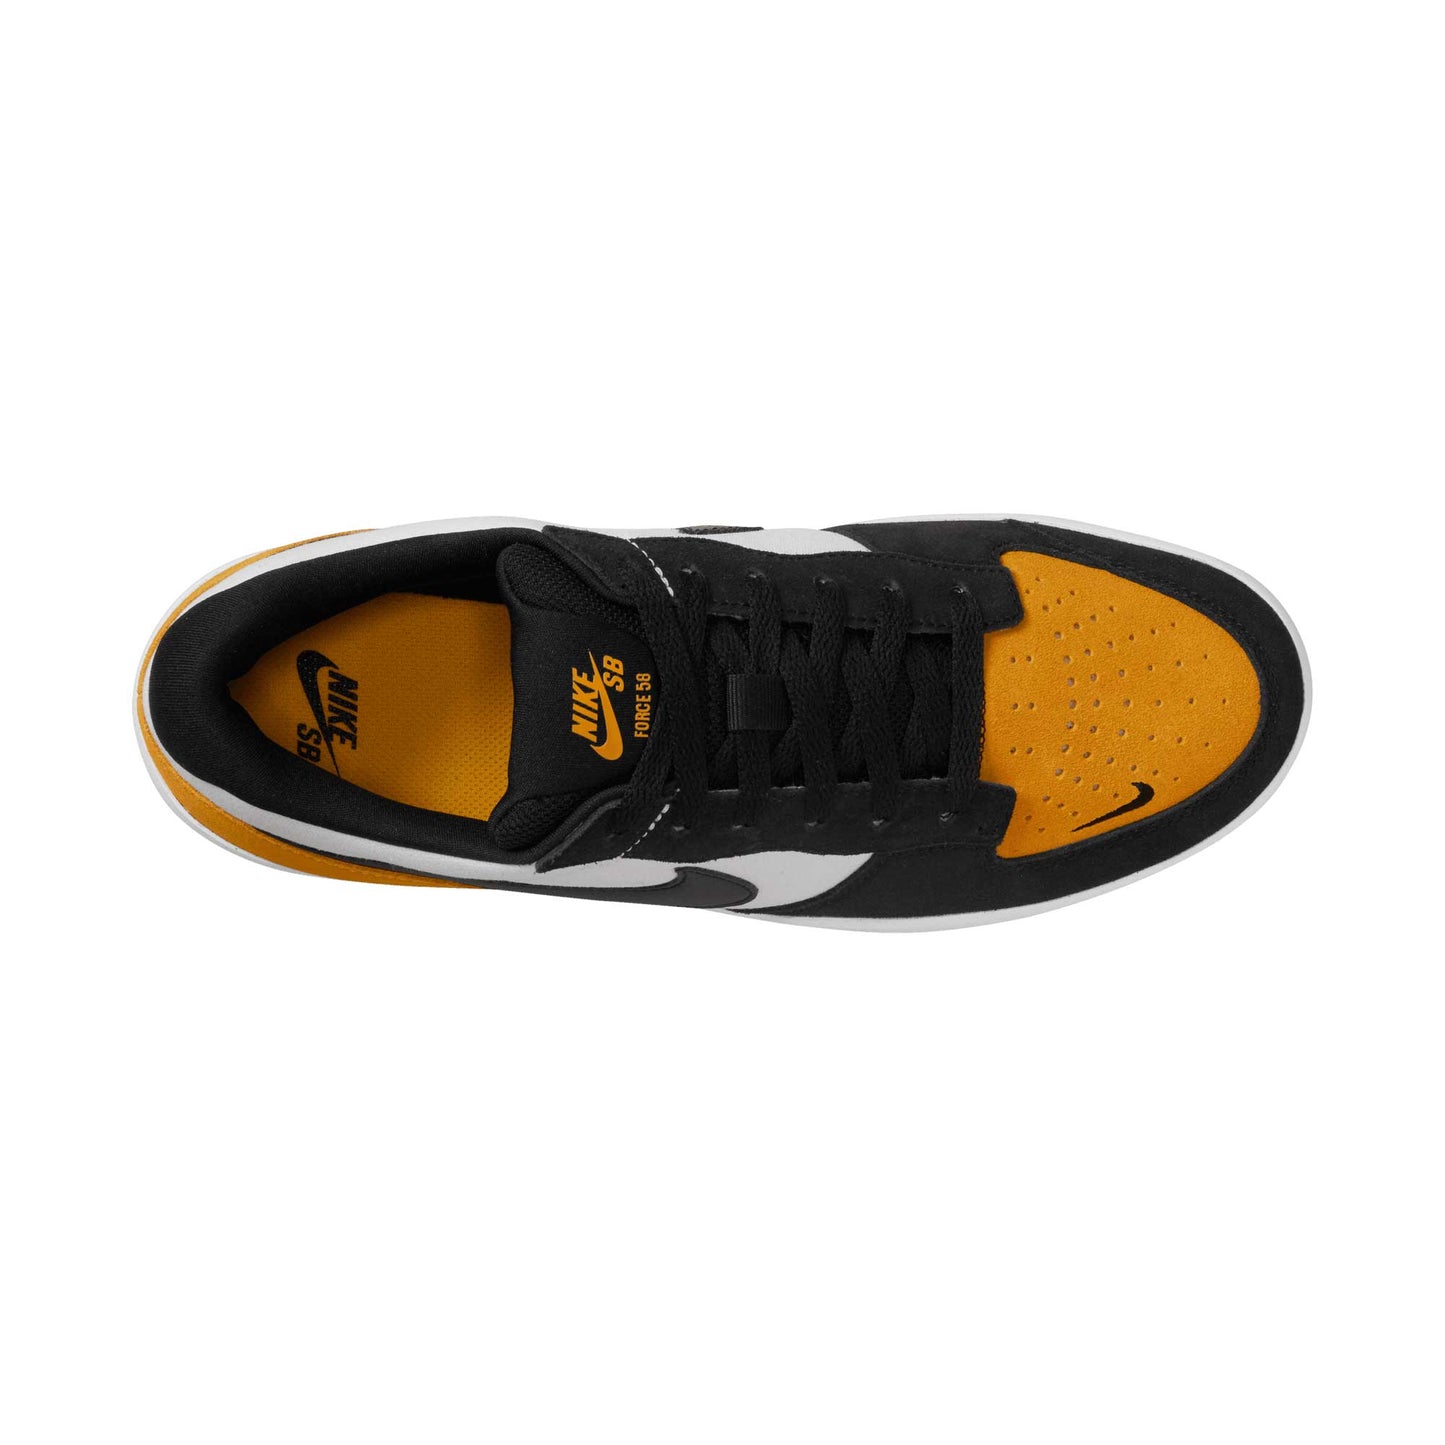 Nike SB Force 58, university gold/black-white - Tiki Room Skateboards - 9